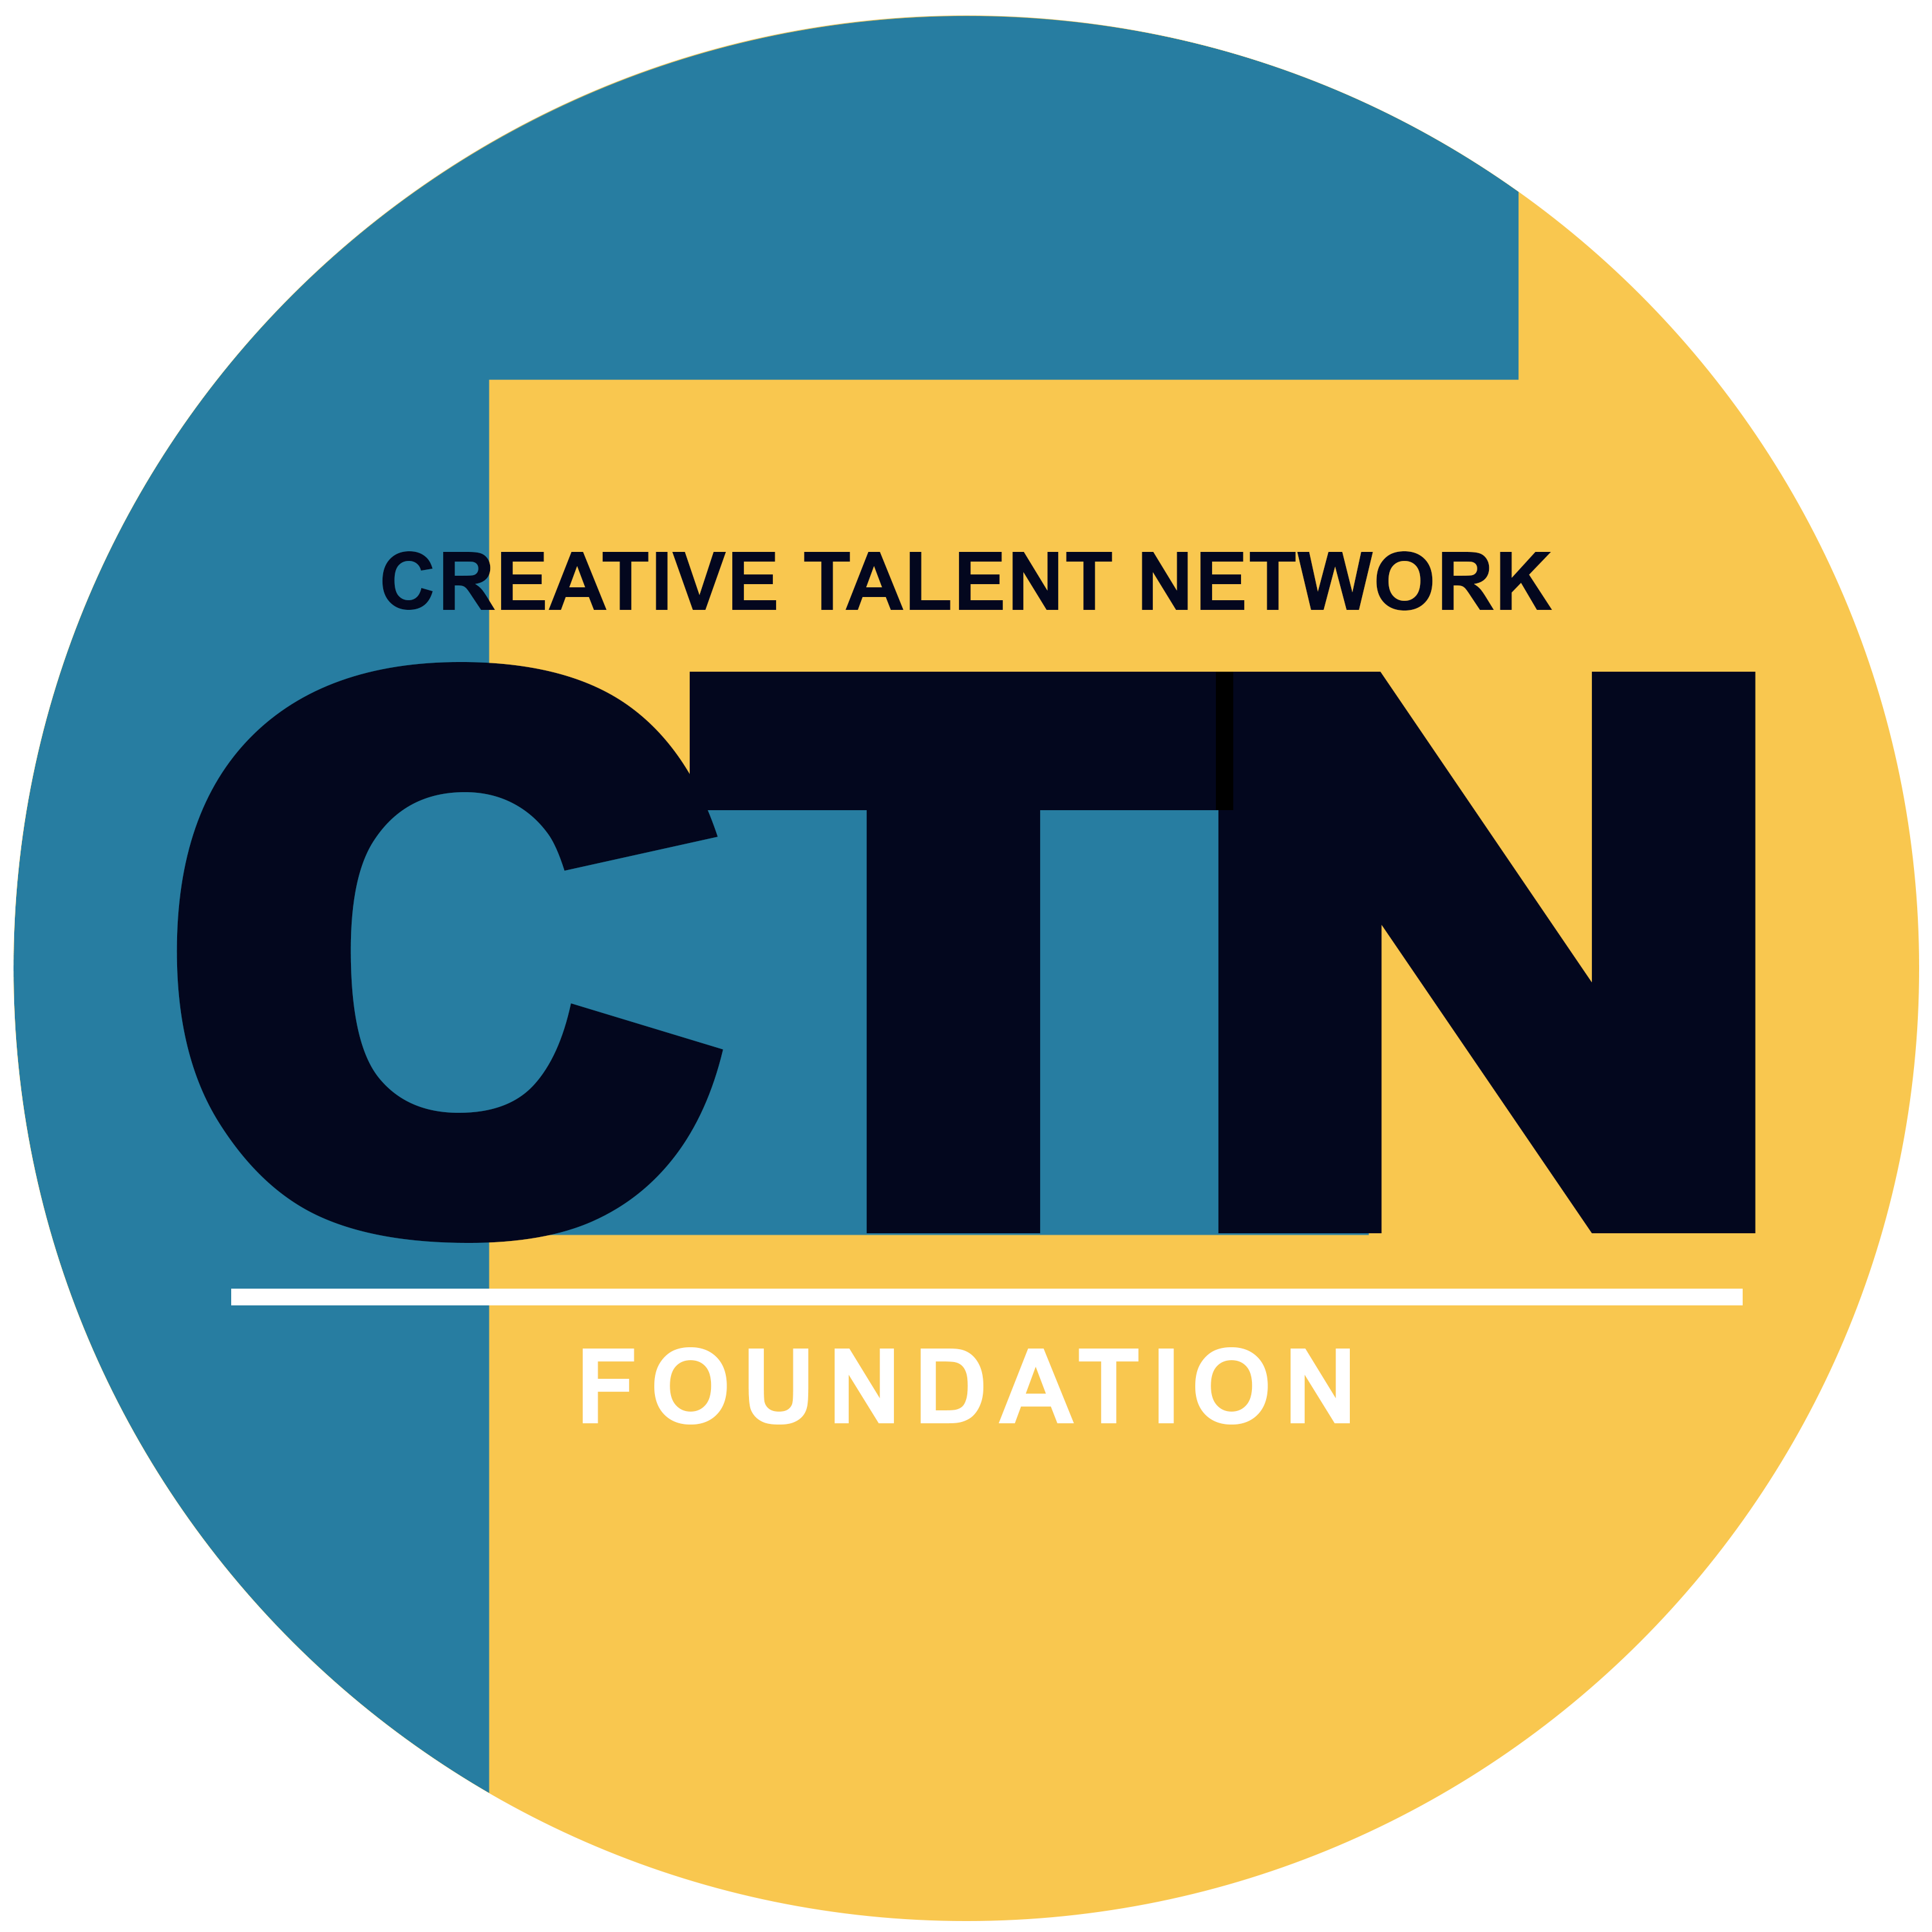 Creative Talent Network Foundation logo